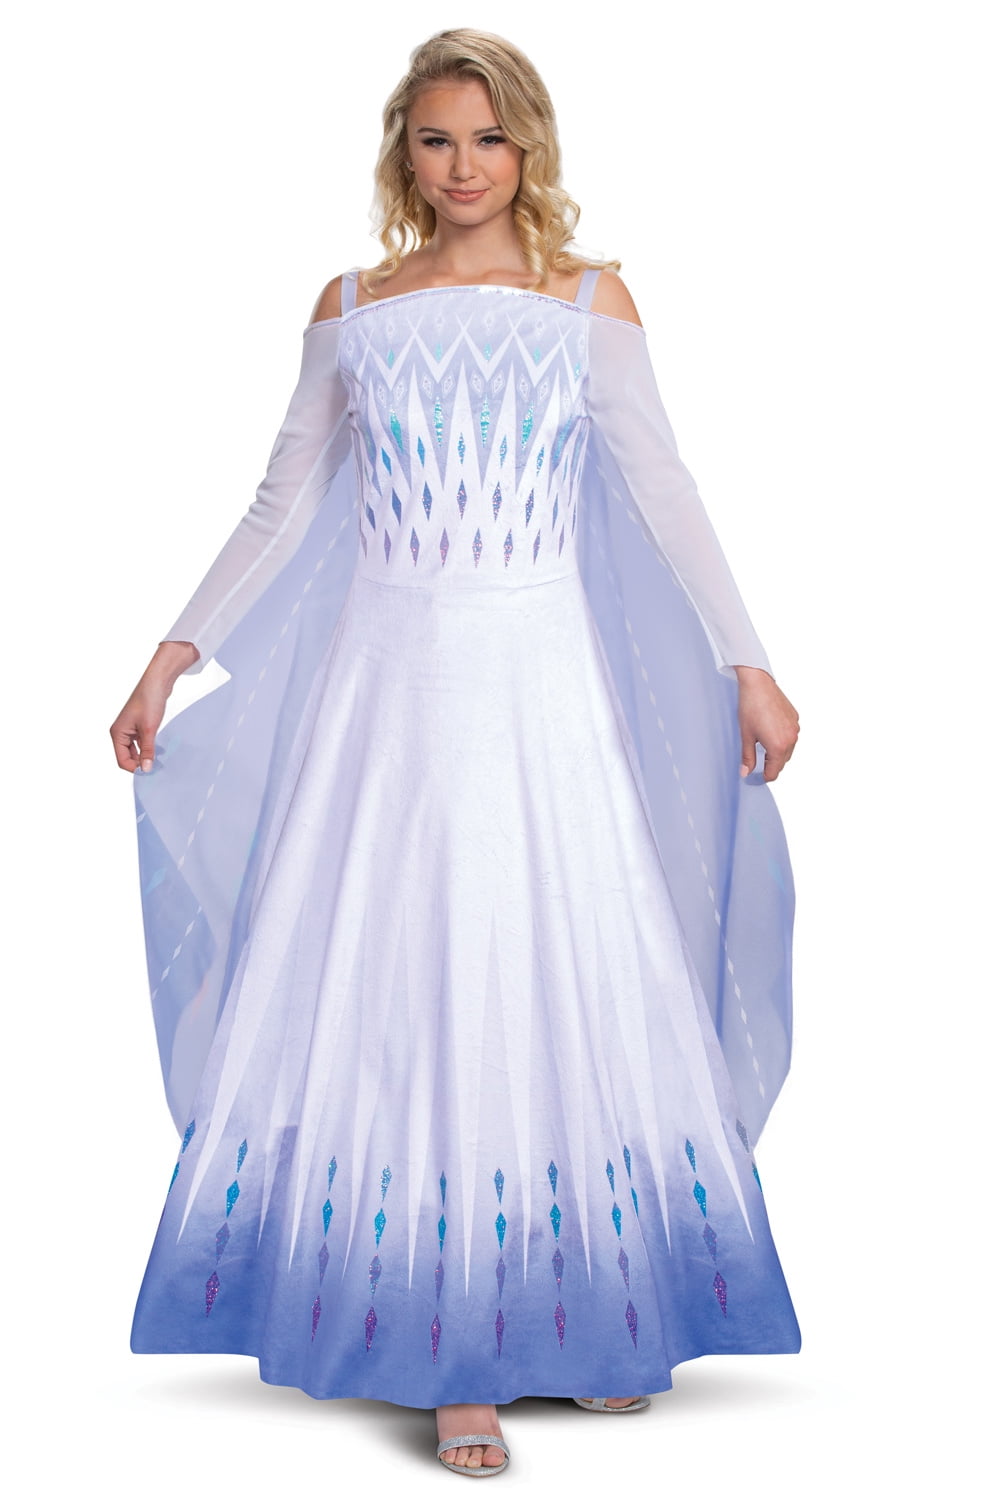 Frozen 2 Elsa Disguise Disney Classic Girl's Halloween Fancy-Dress